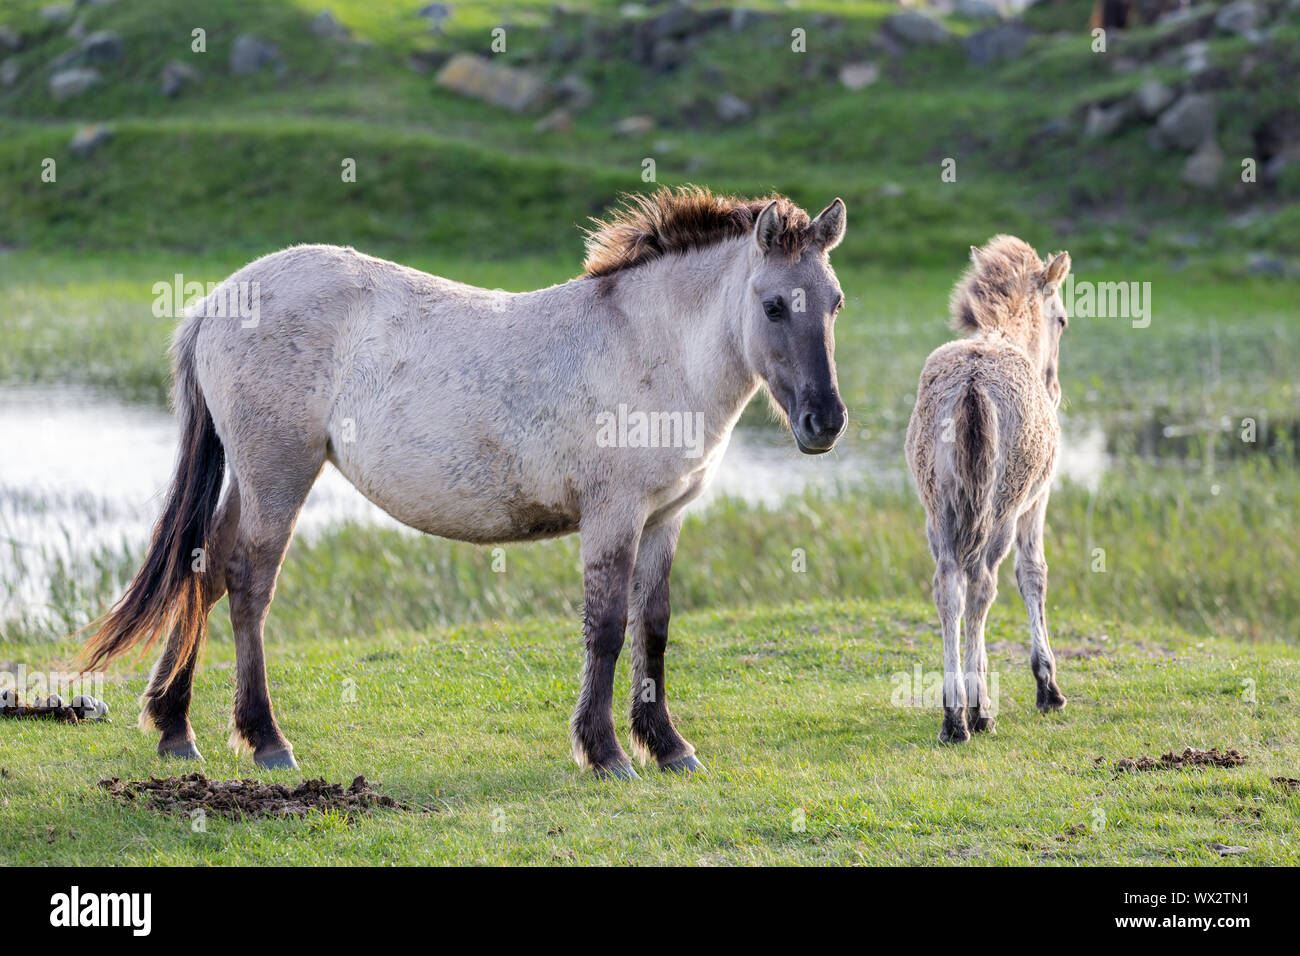 Dutch National Park Oostvaardersplassen con konik cavallo e puledro Foto Stock